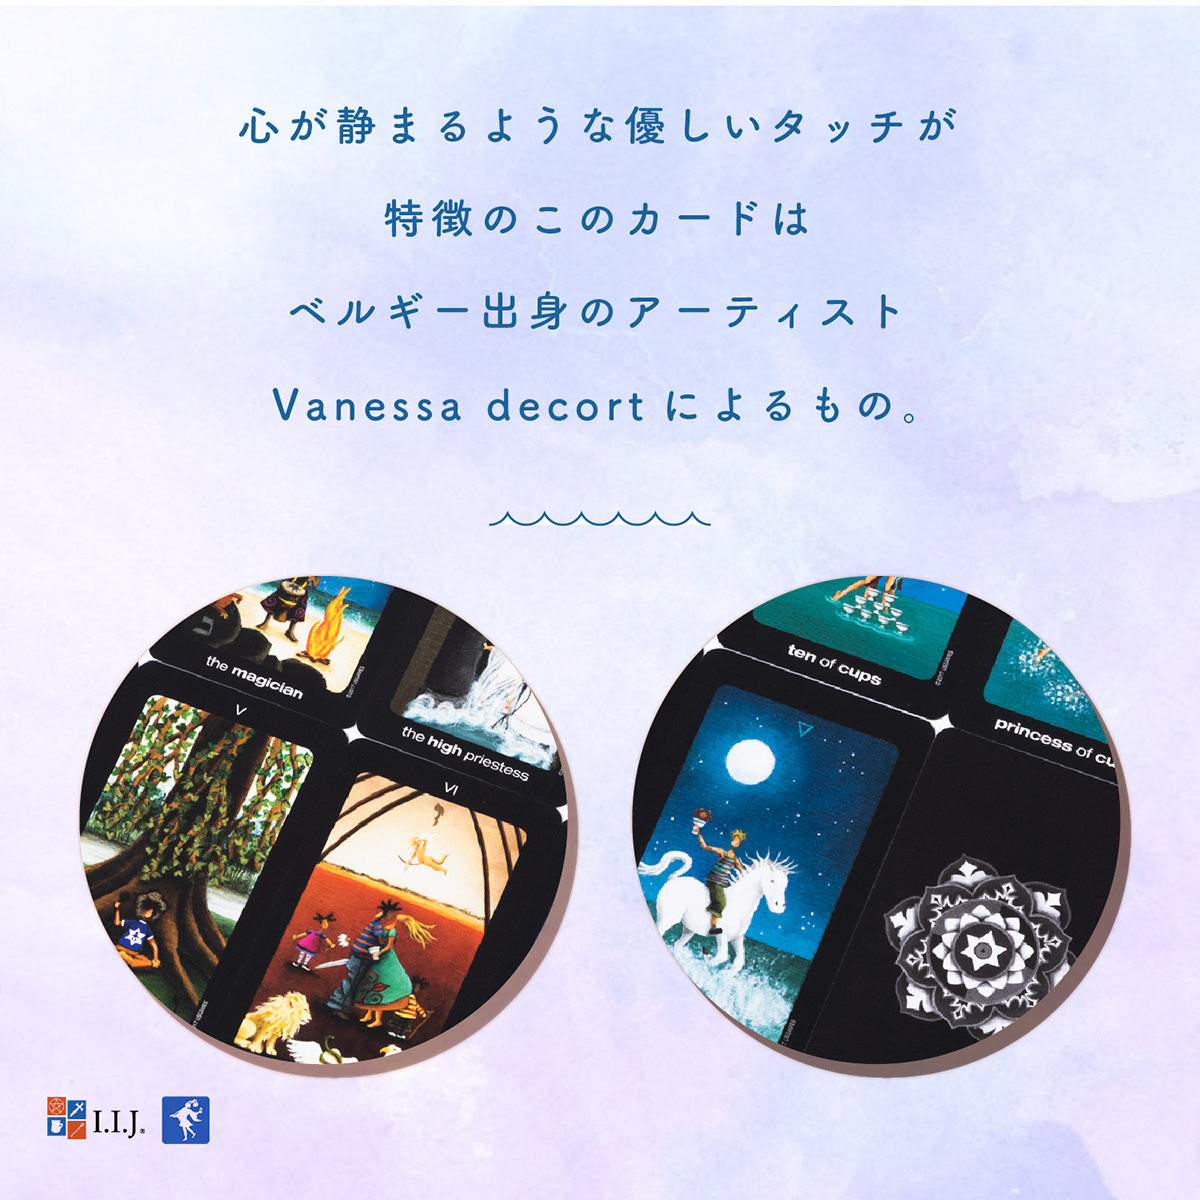  карты таро солнечный * and * moon * таро в жестяной банке Sun and Moon in a Tin японский язык описание документы 